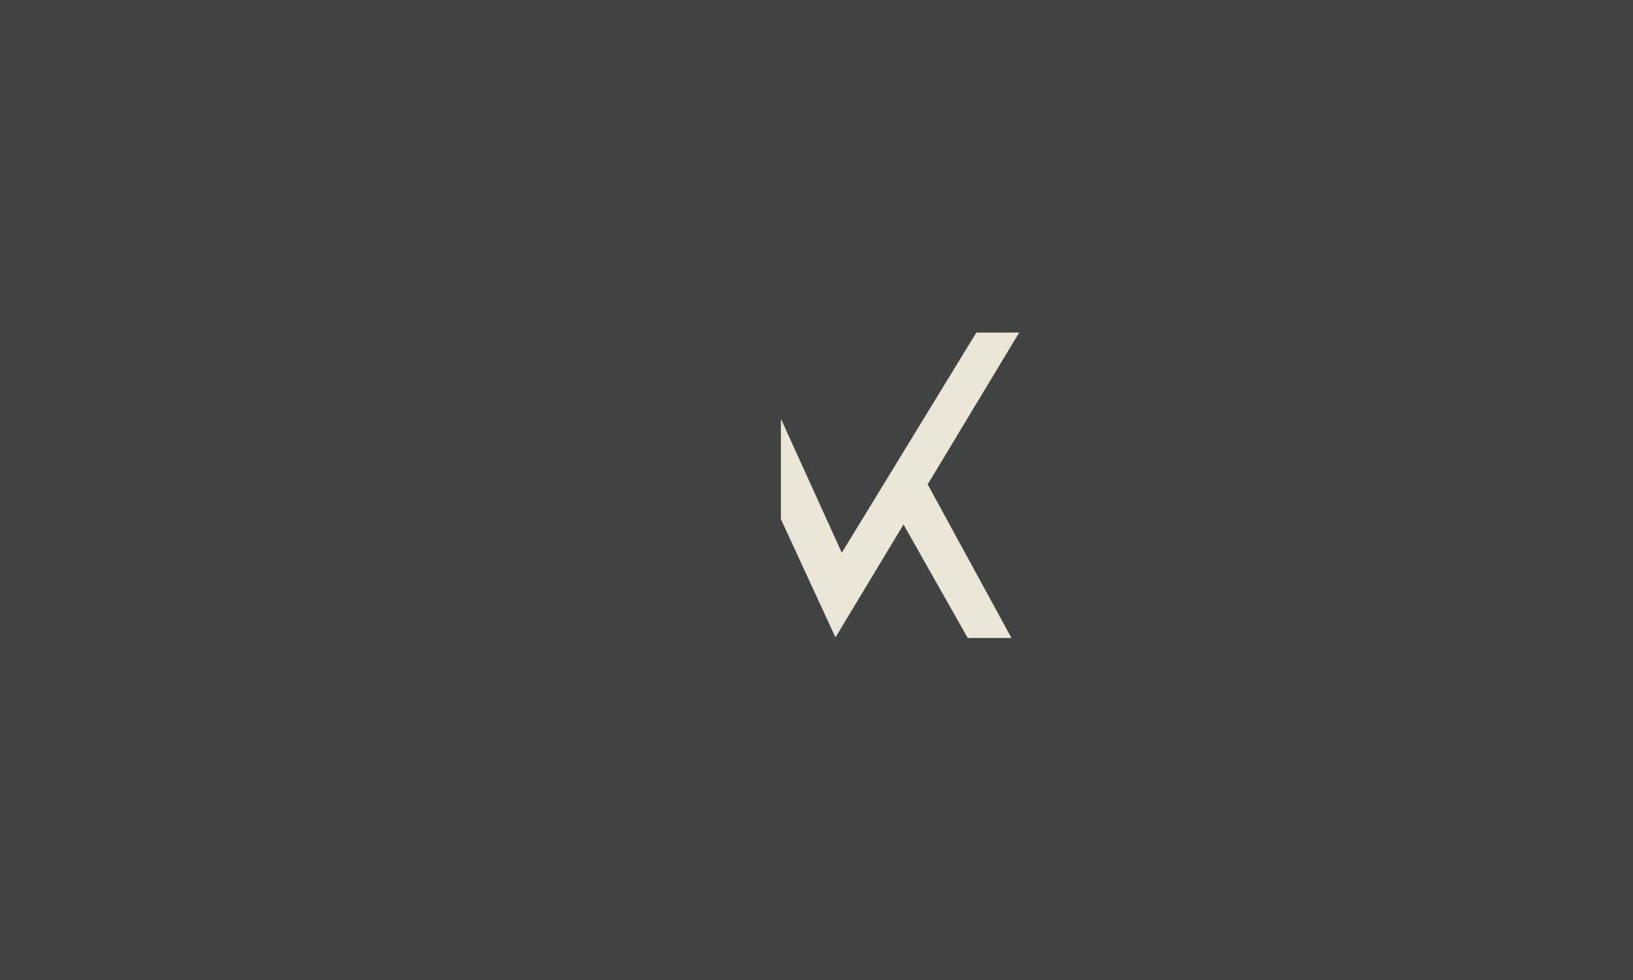 alfabet letters initialen monogram logo vk, kv, v en k vector